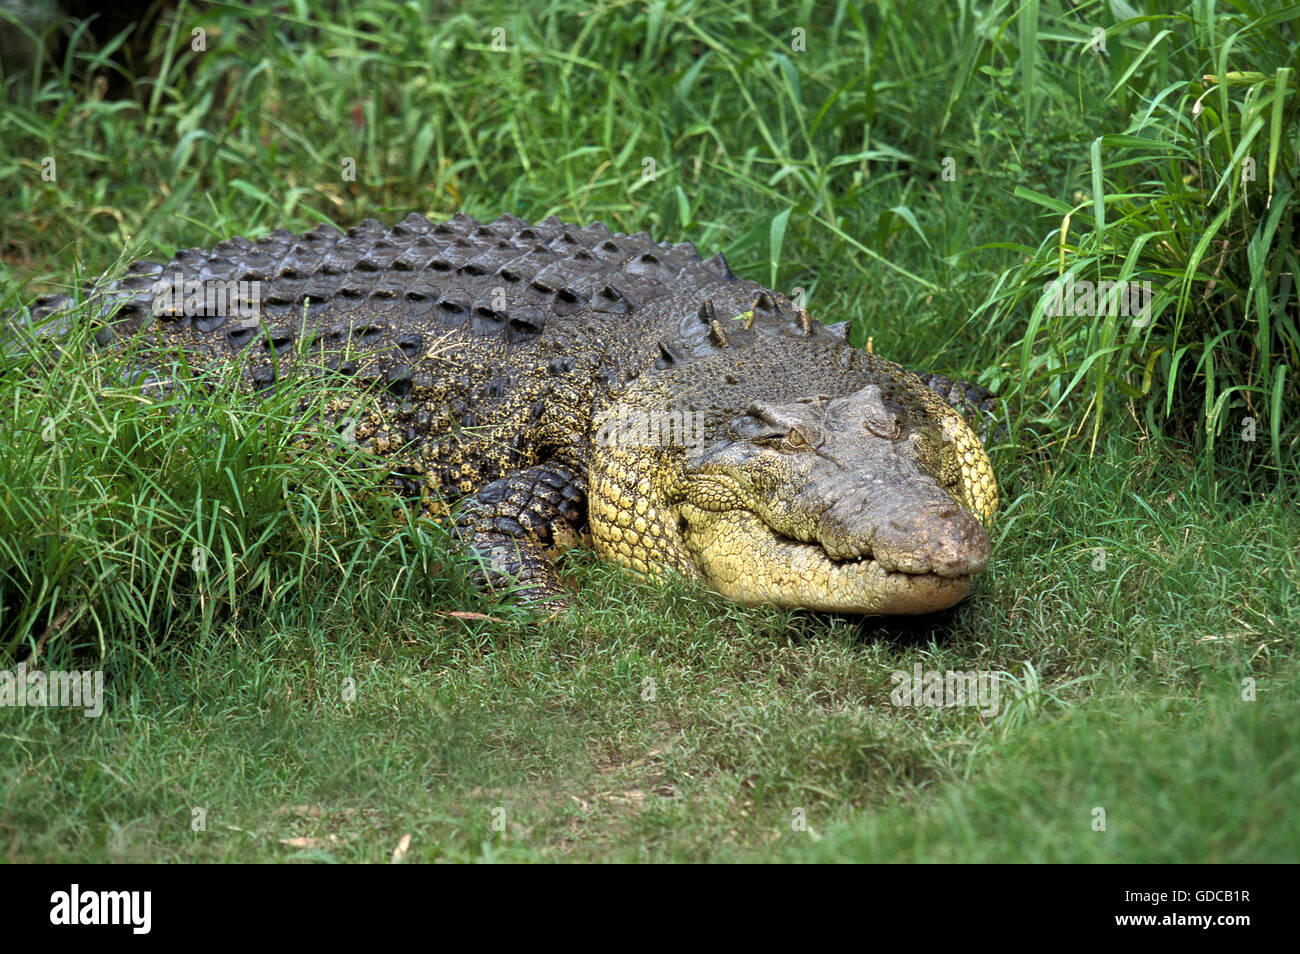 Australian Saltwater Crocodile Estuarine crocodylus porosus, Australia Stock Photo Alamy